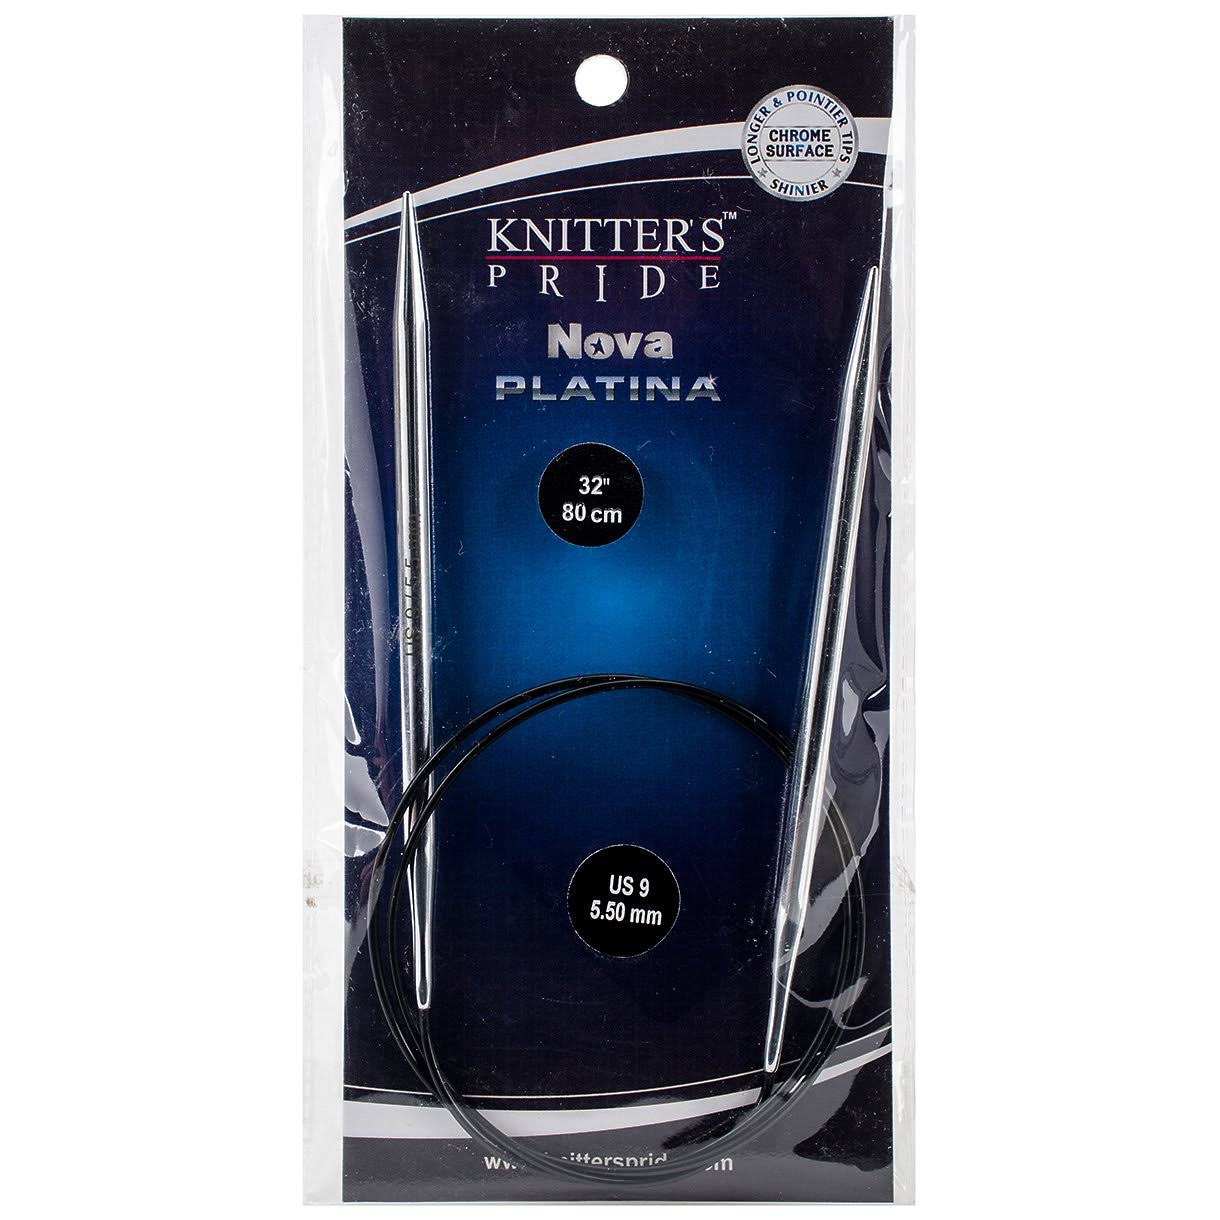 Knitter's Pride Nova Platina 32" Circular Needle (1 pair) - 5.50mm (US 9)